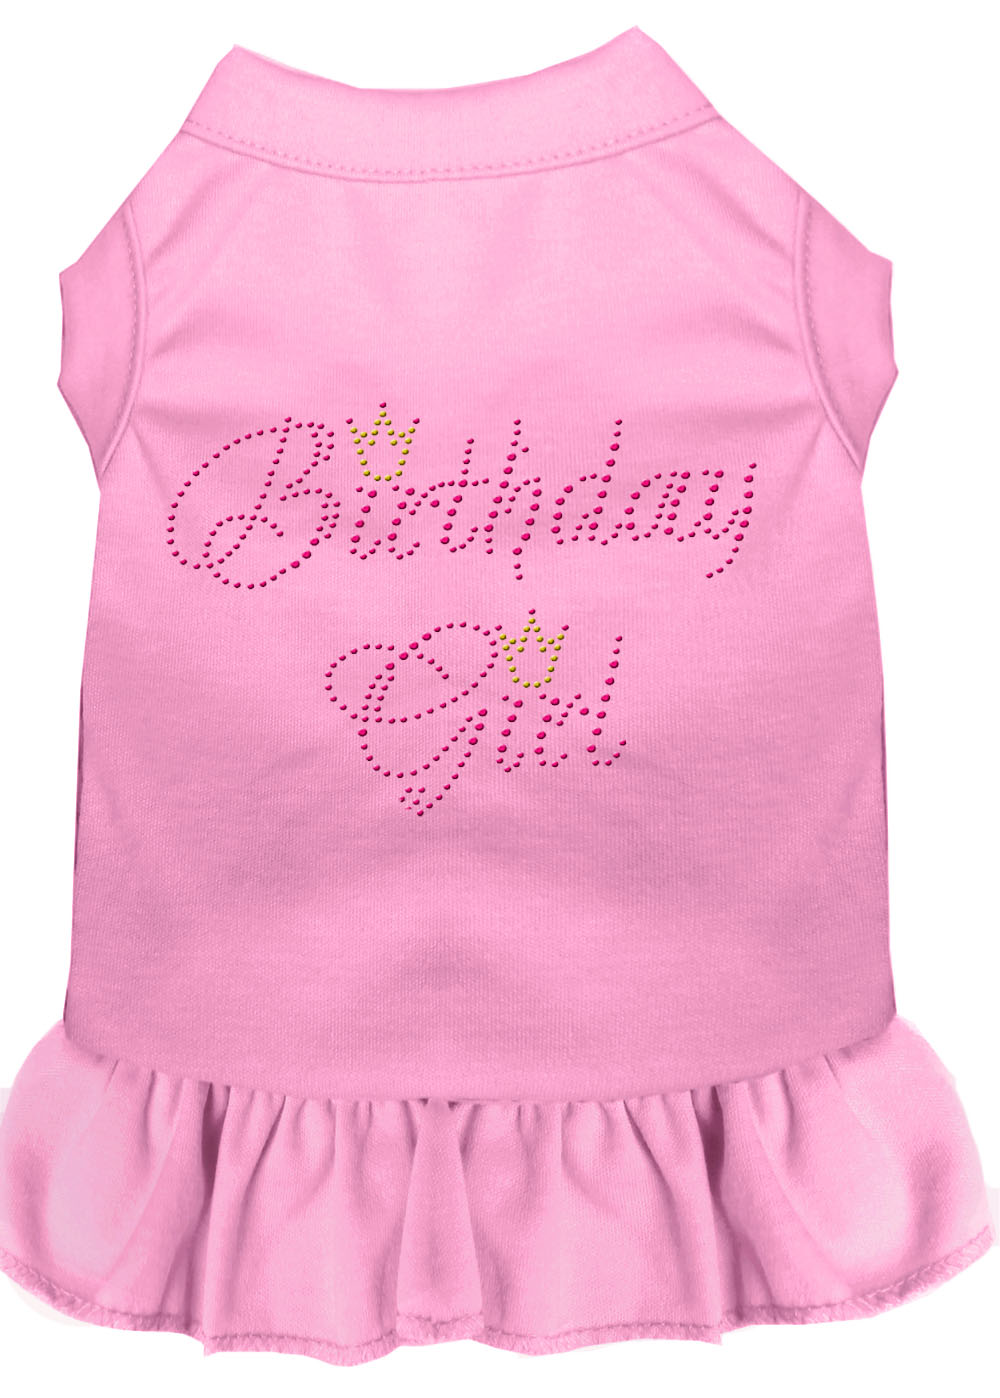 Birthday Girl Rhinestone Dress Light Pink XL